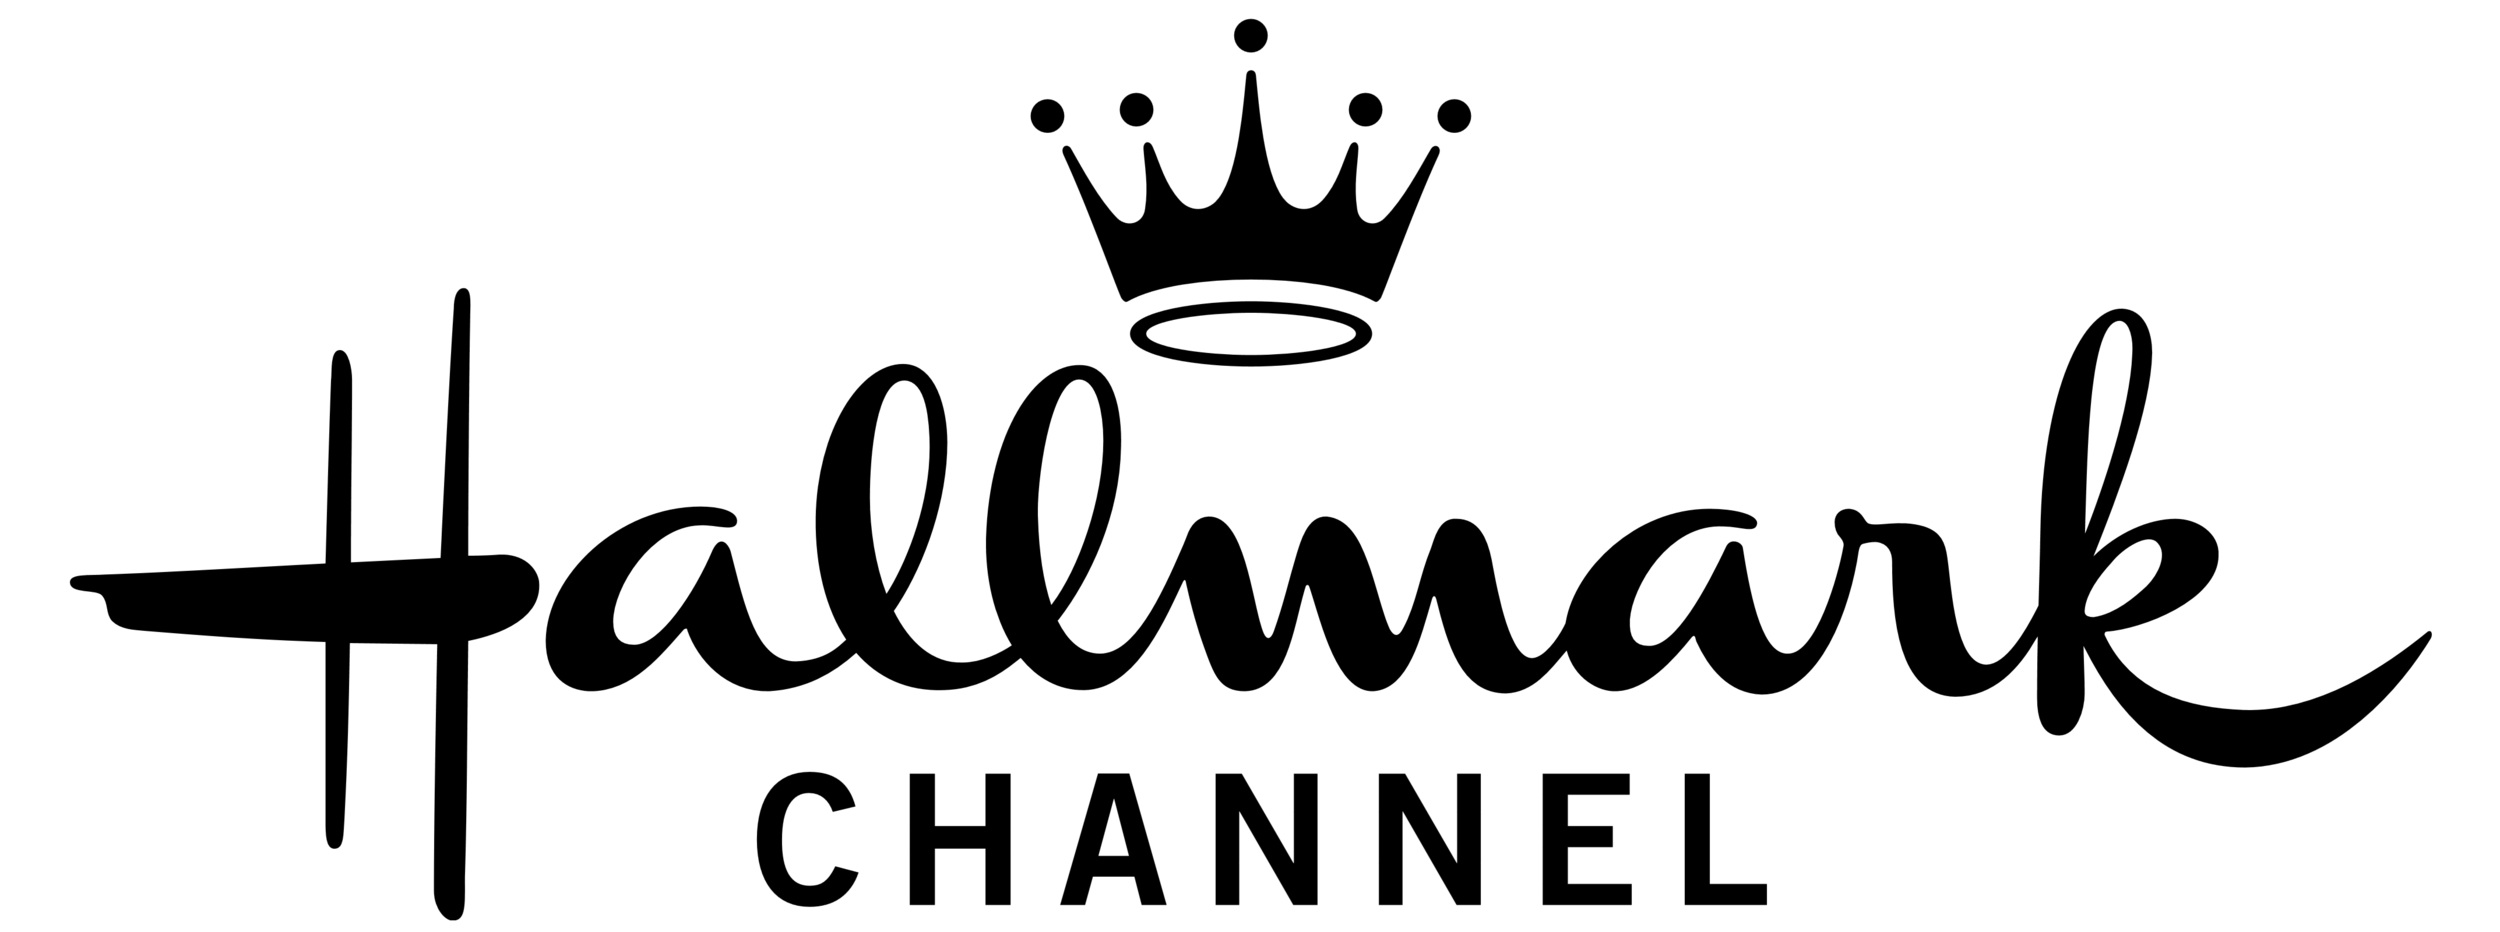 kisspng-hallmark-channel-hallmark-movies-mysteries-telev-5af1d3308810b0.9548969215257976805573.png